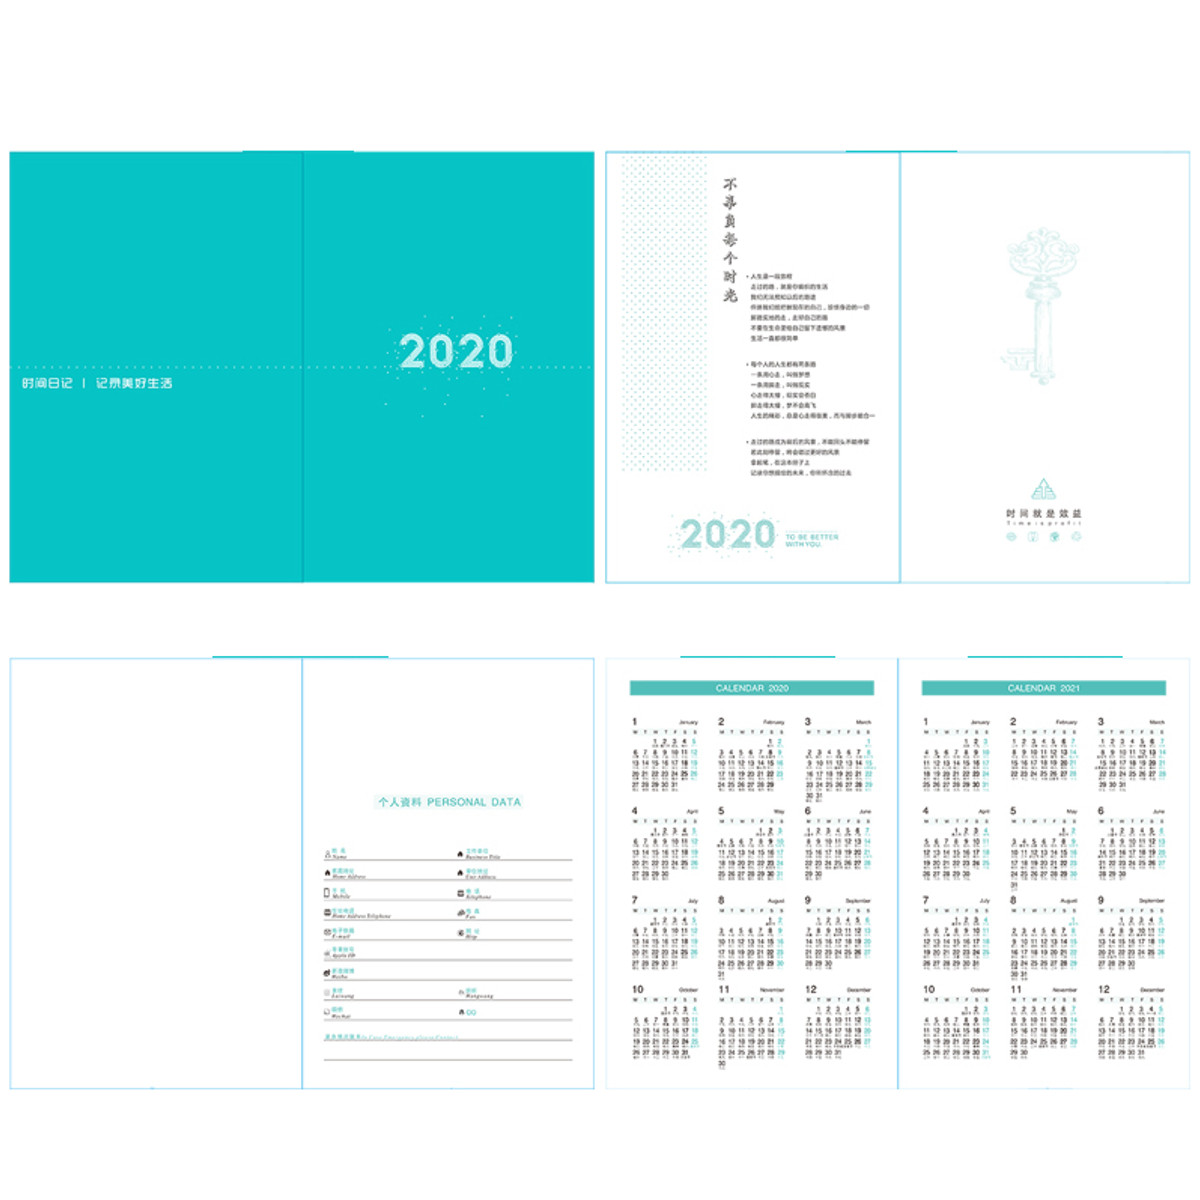 2020-schedule-book-365-days-daily-schedule-calendar-notepad-work-log-notebook-1617396-10